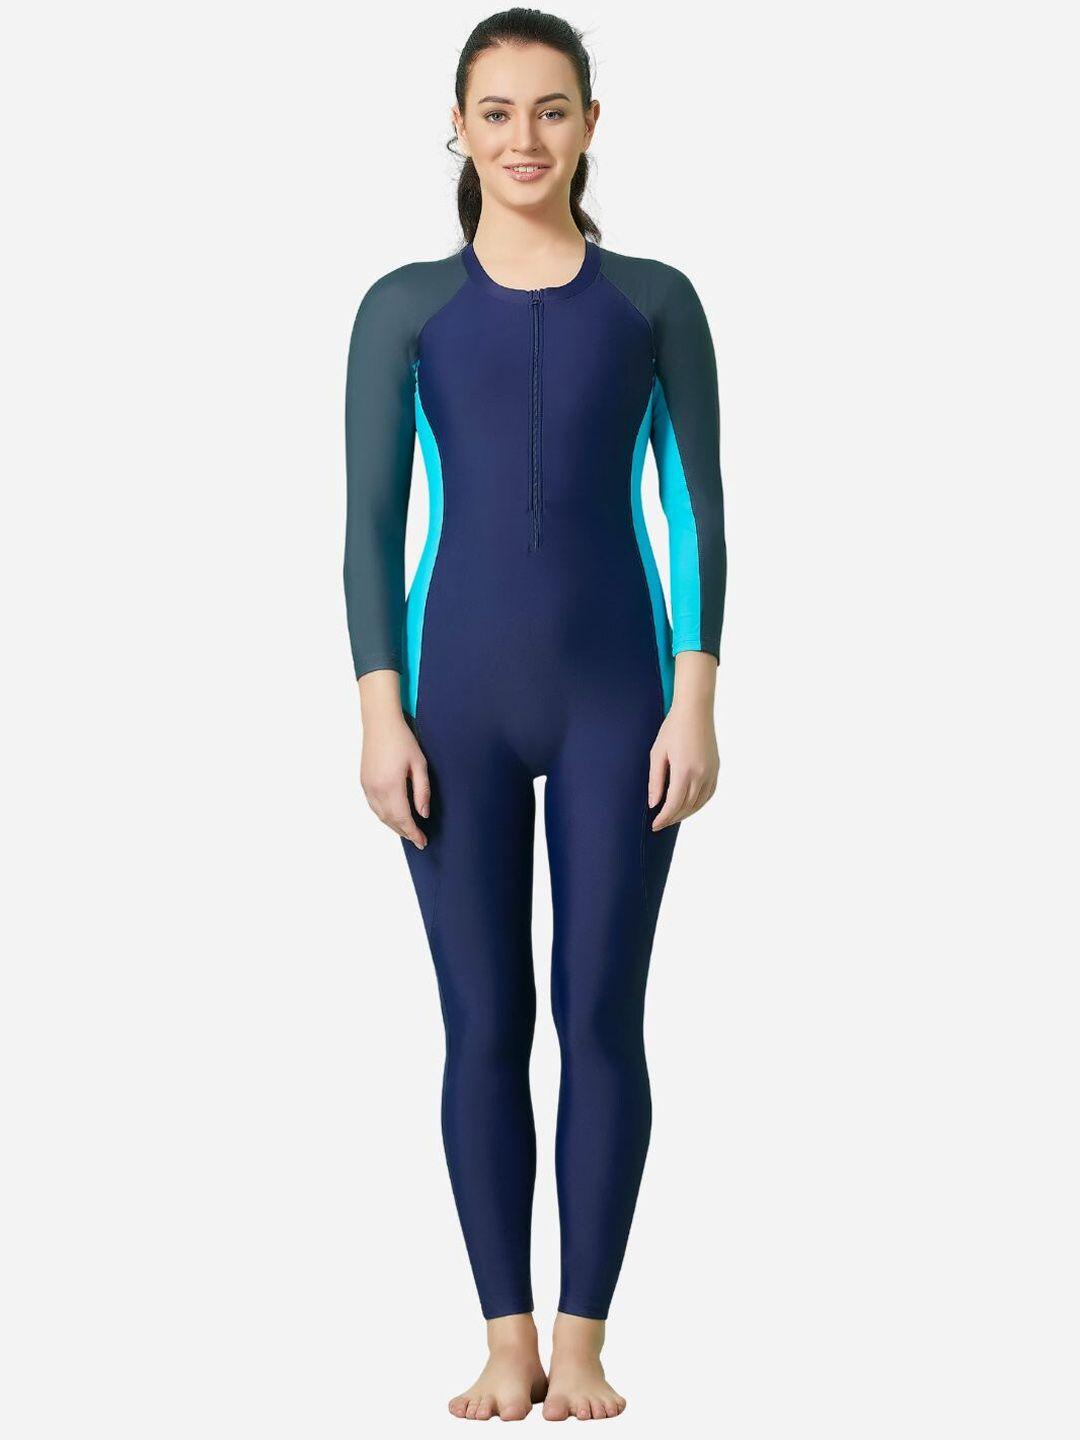 veloz colourblocked anti-chafing padded swimwear bodysuit